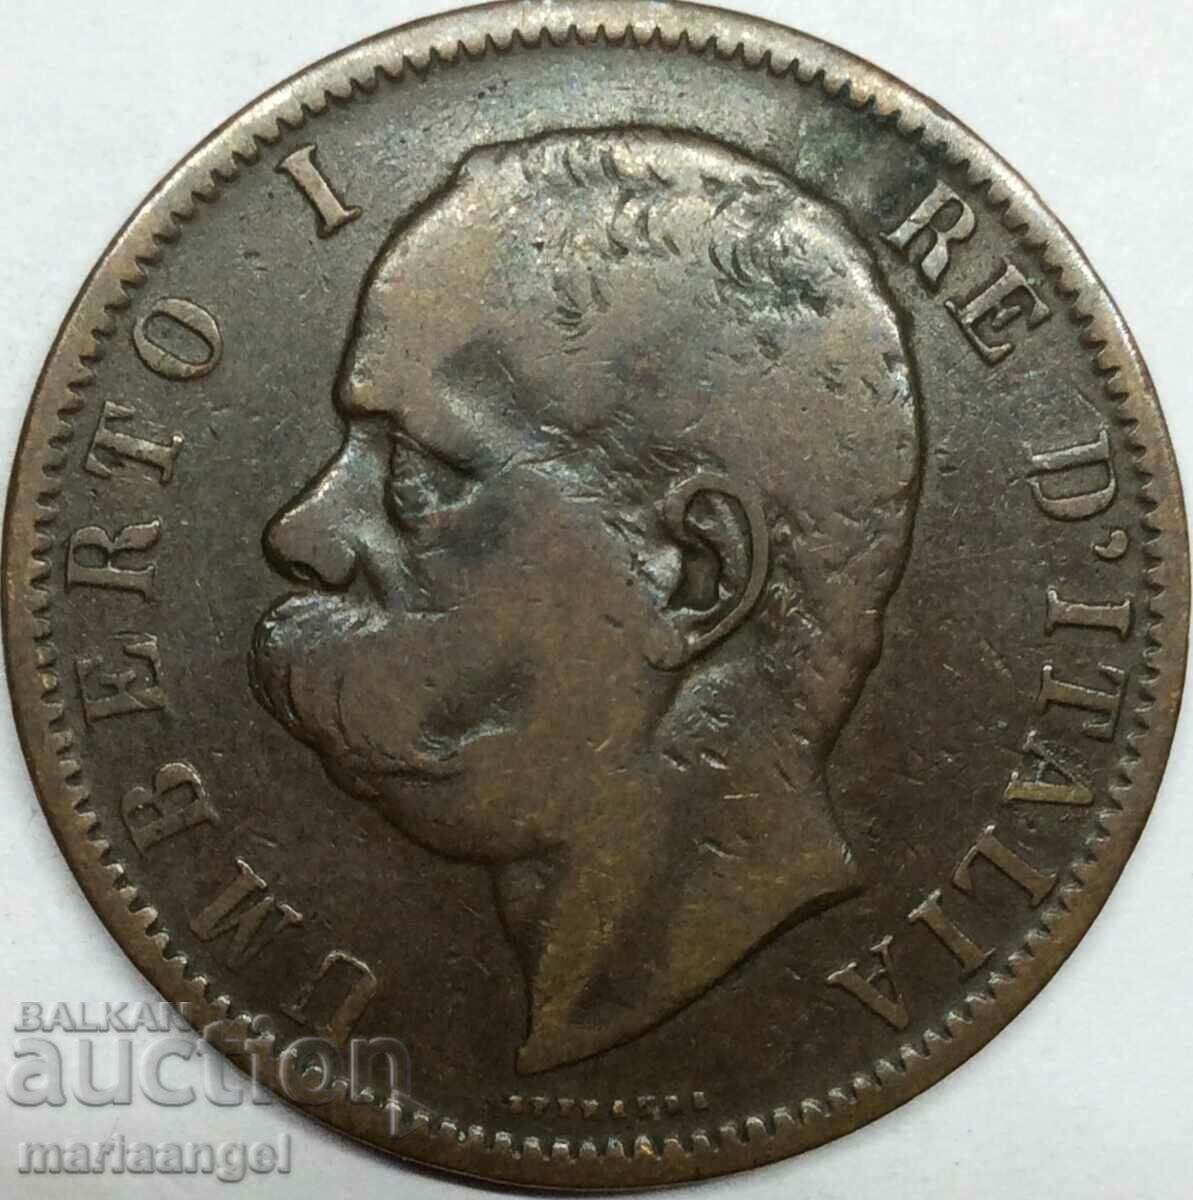 Italia - 10 centesimi 1894 Umberto I 30mm